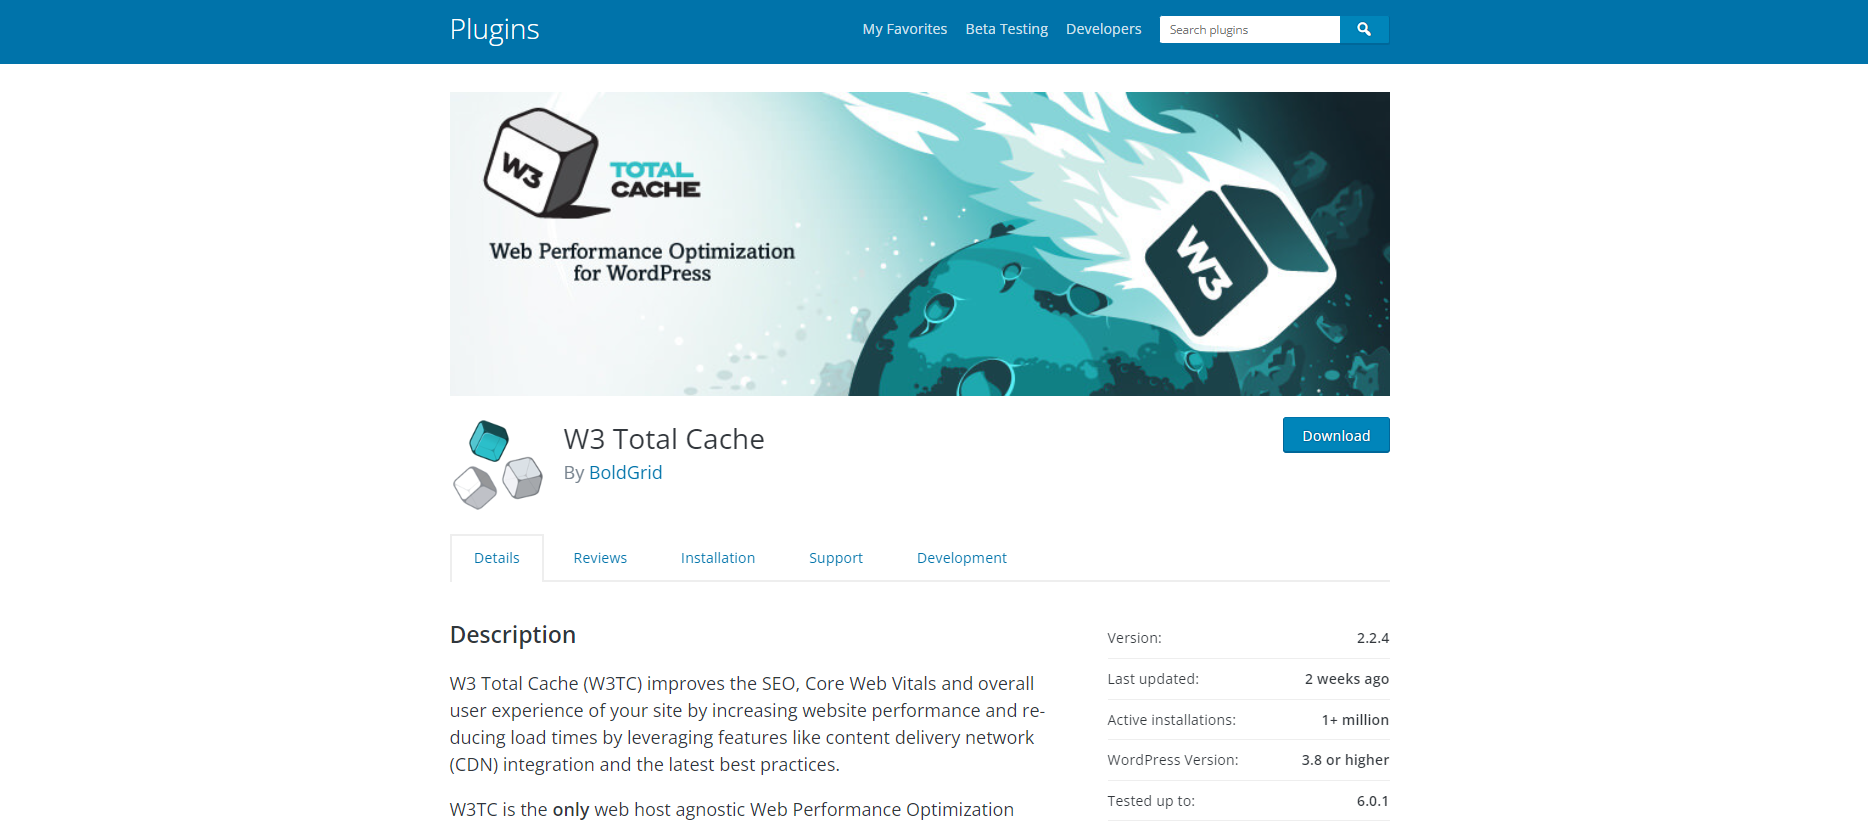 W3 Total Cache - WordPress cache plugins